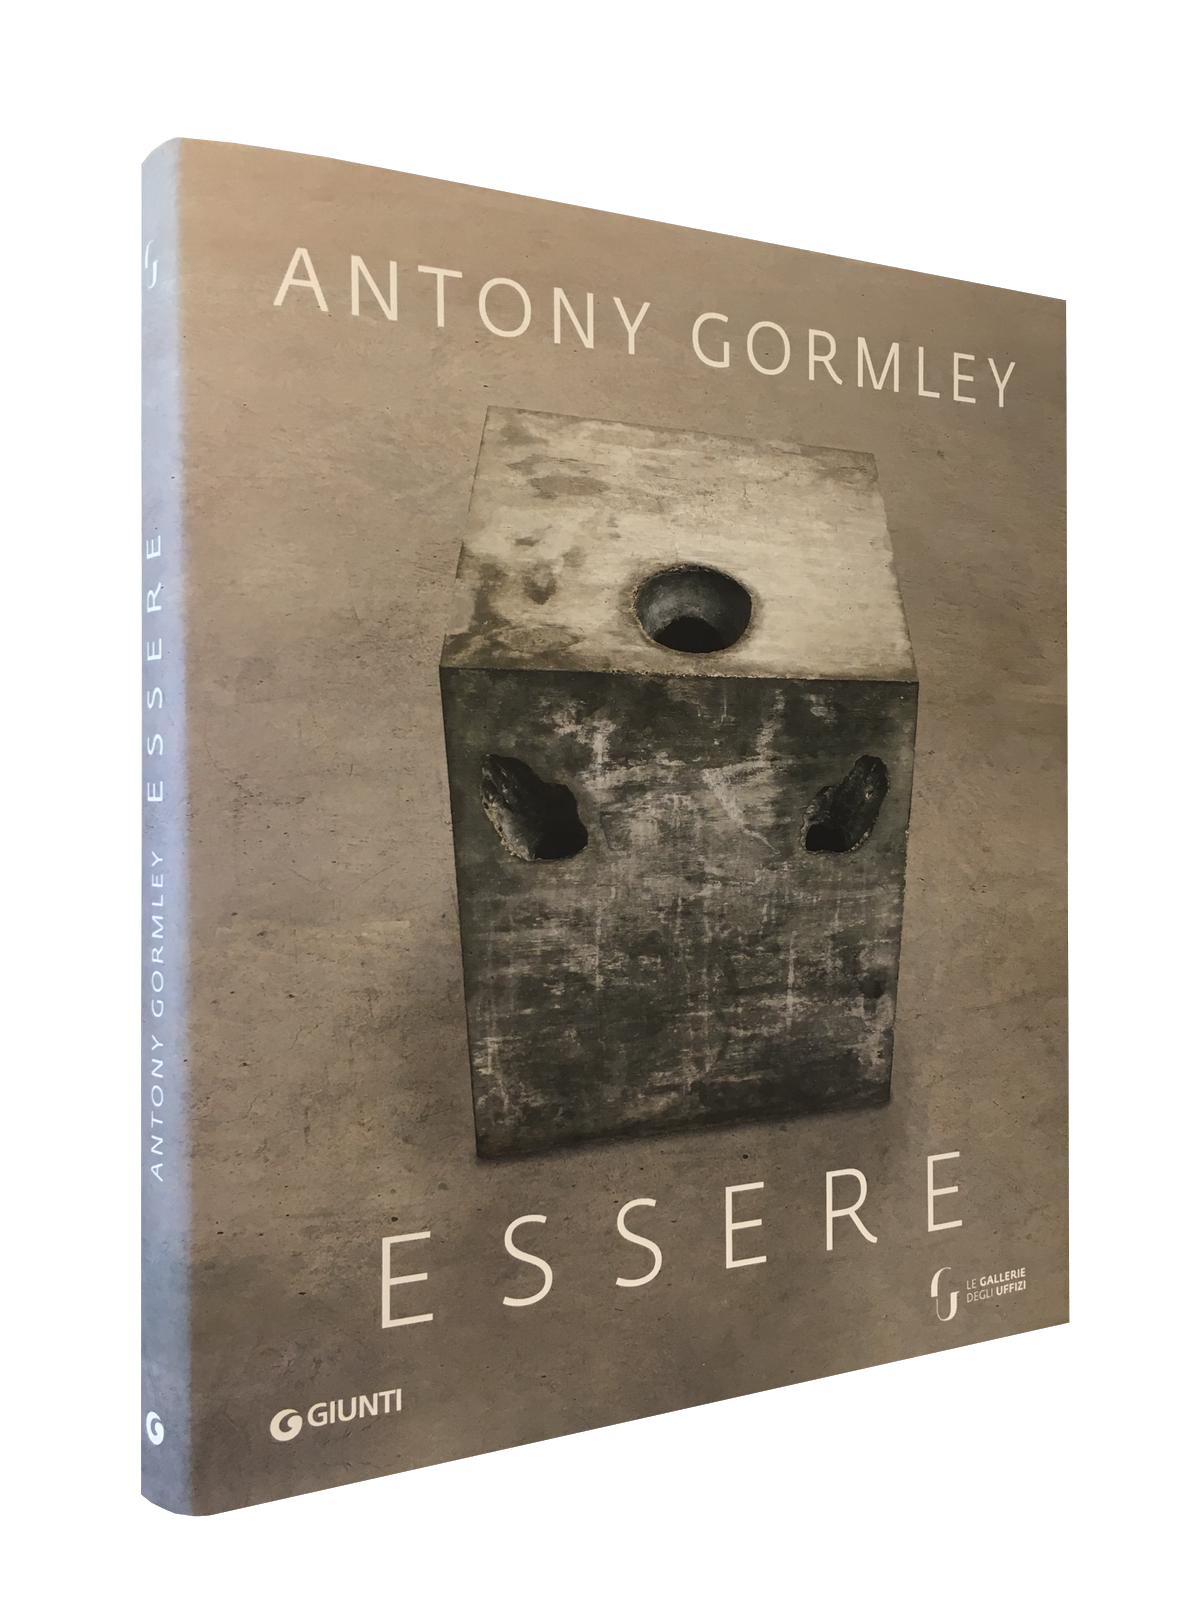 Antony Gormley. ESSERE, 2019